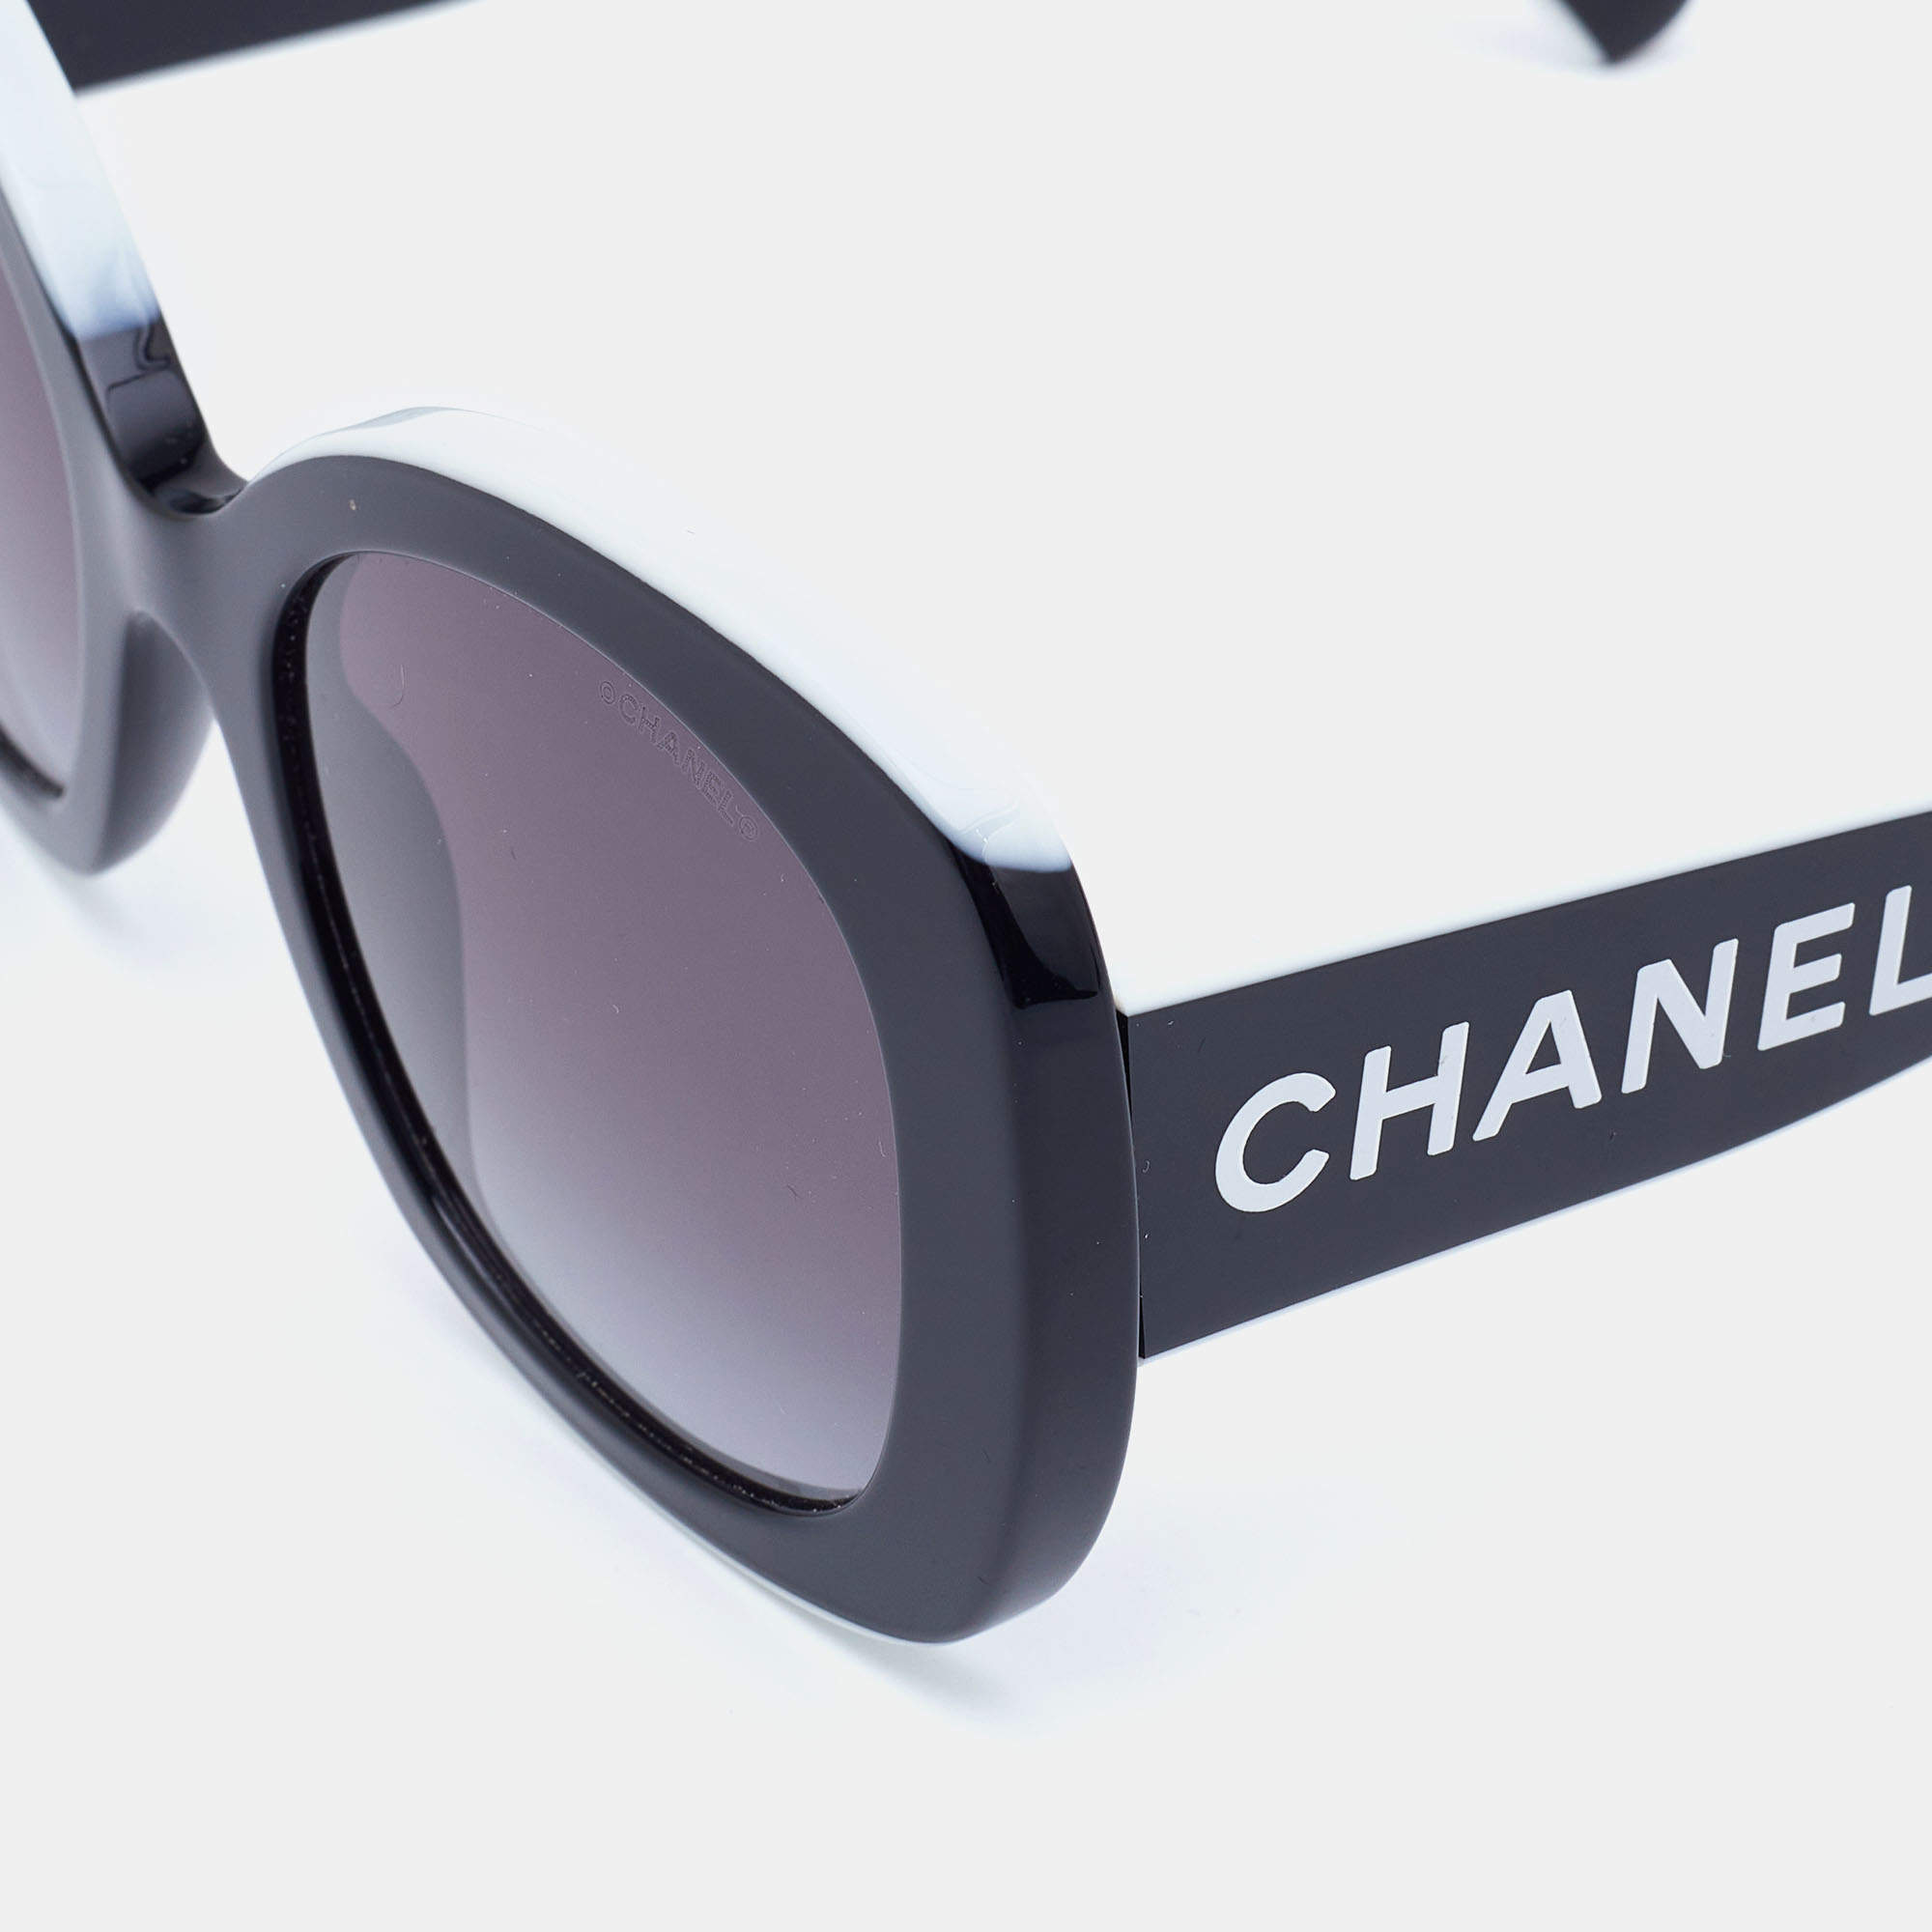 Chanel Square Sunglasses - Acetate, Dark Tortoise - Polarized - UV Protected - Women's Sunglasses - 5506 C714/83